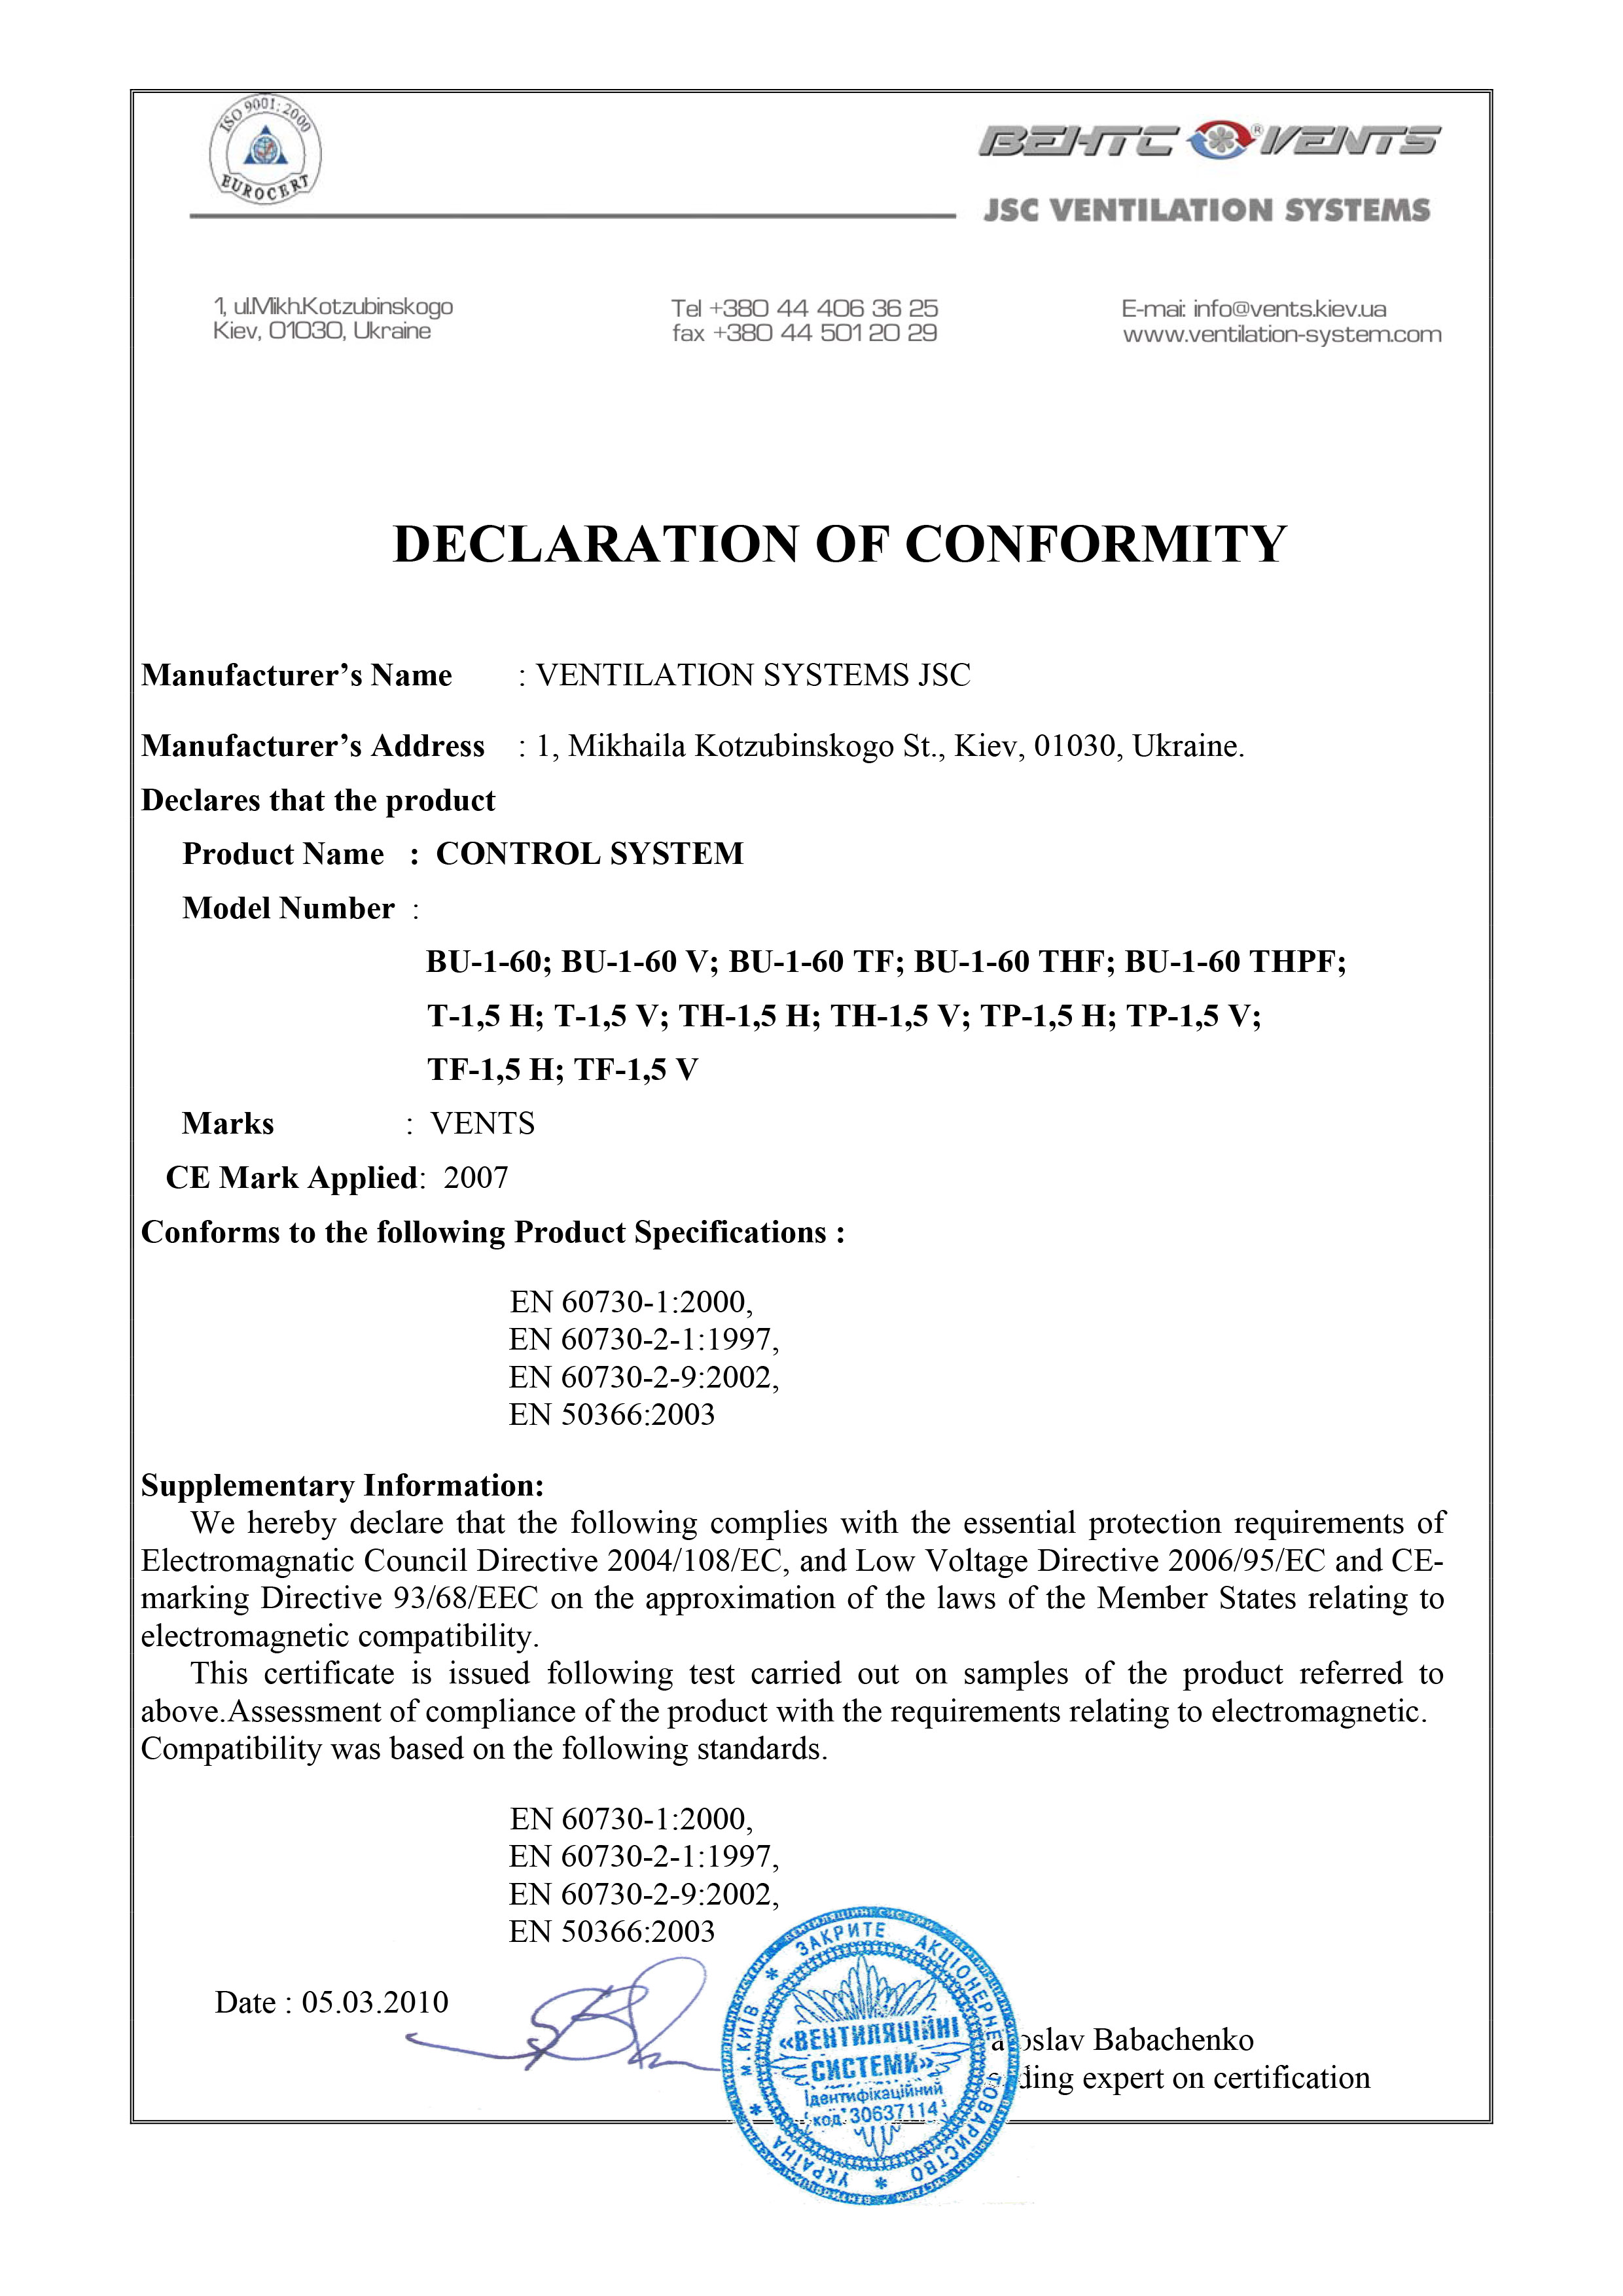 DECLARATION of CONFORMITY "Т...-1,5 N Sensors"